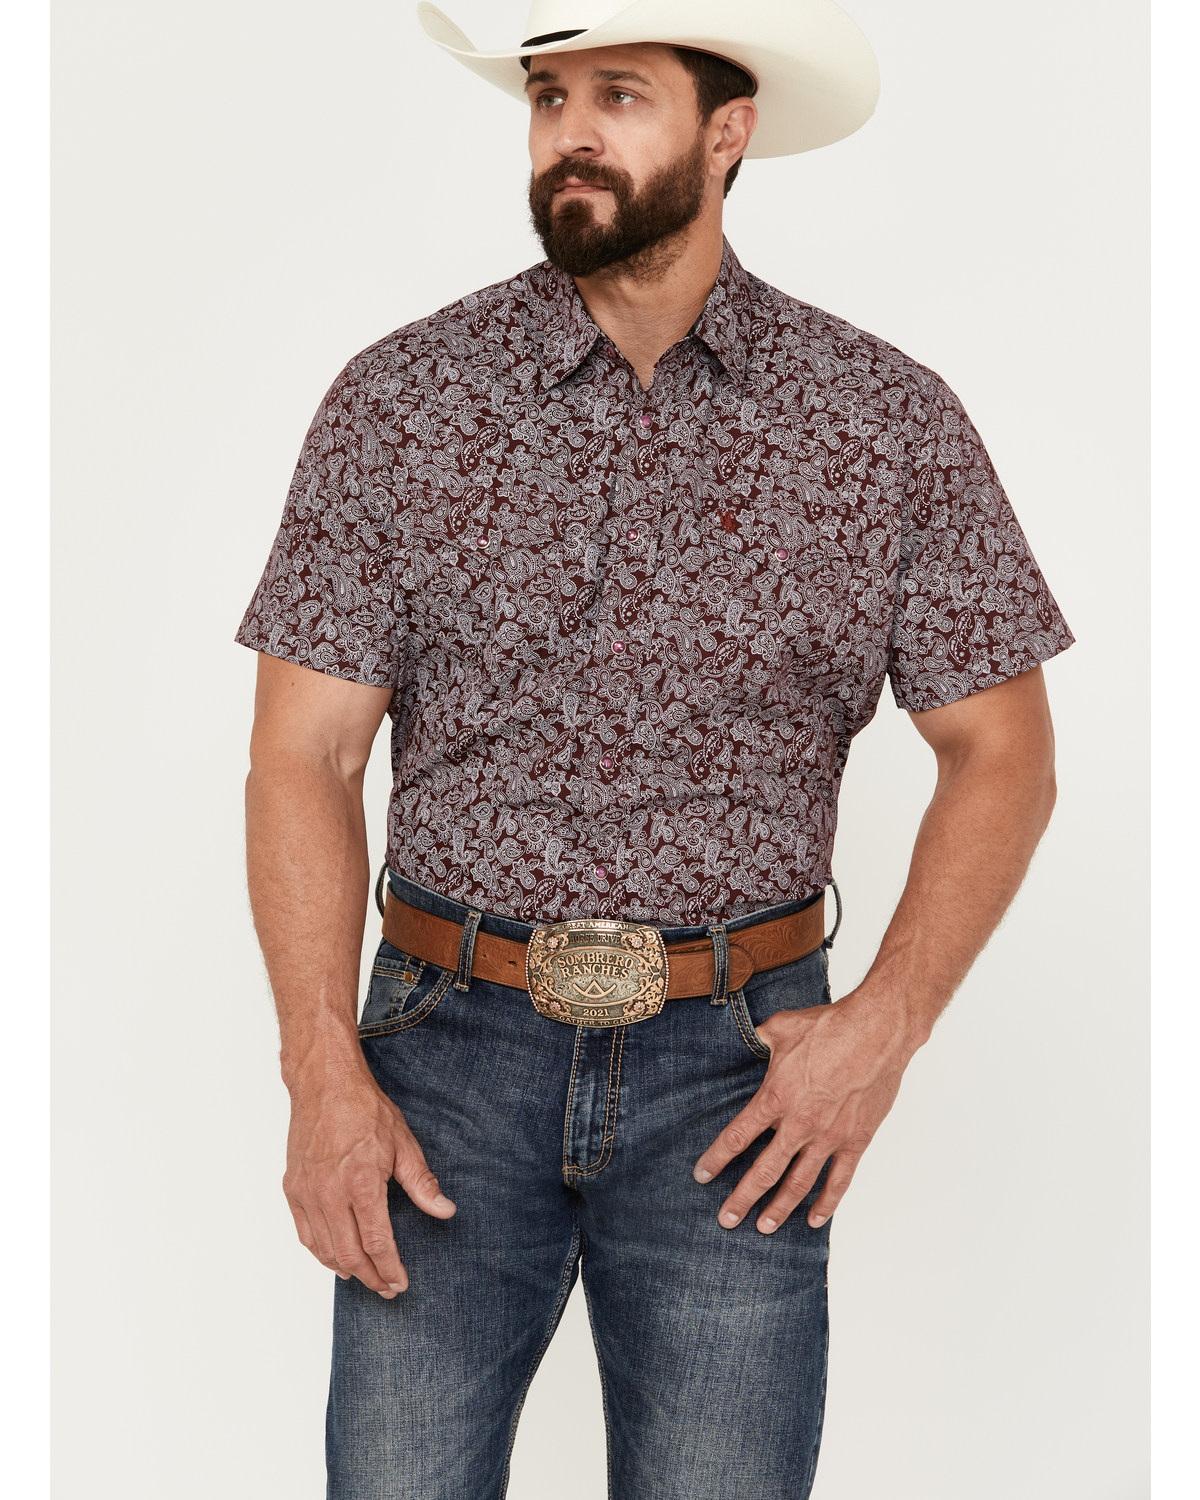 Rodeo Clothing Men's Paisley Print Short Sleeve Snap Western Shirt